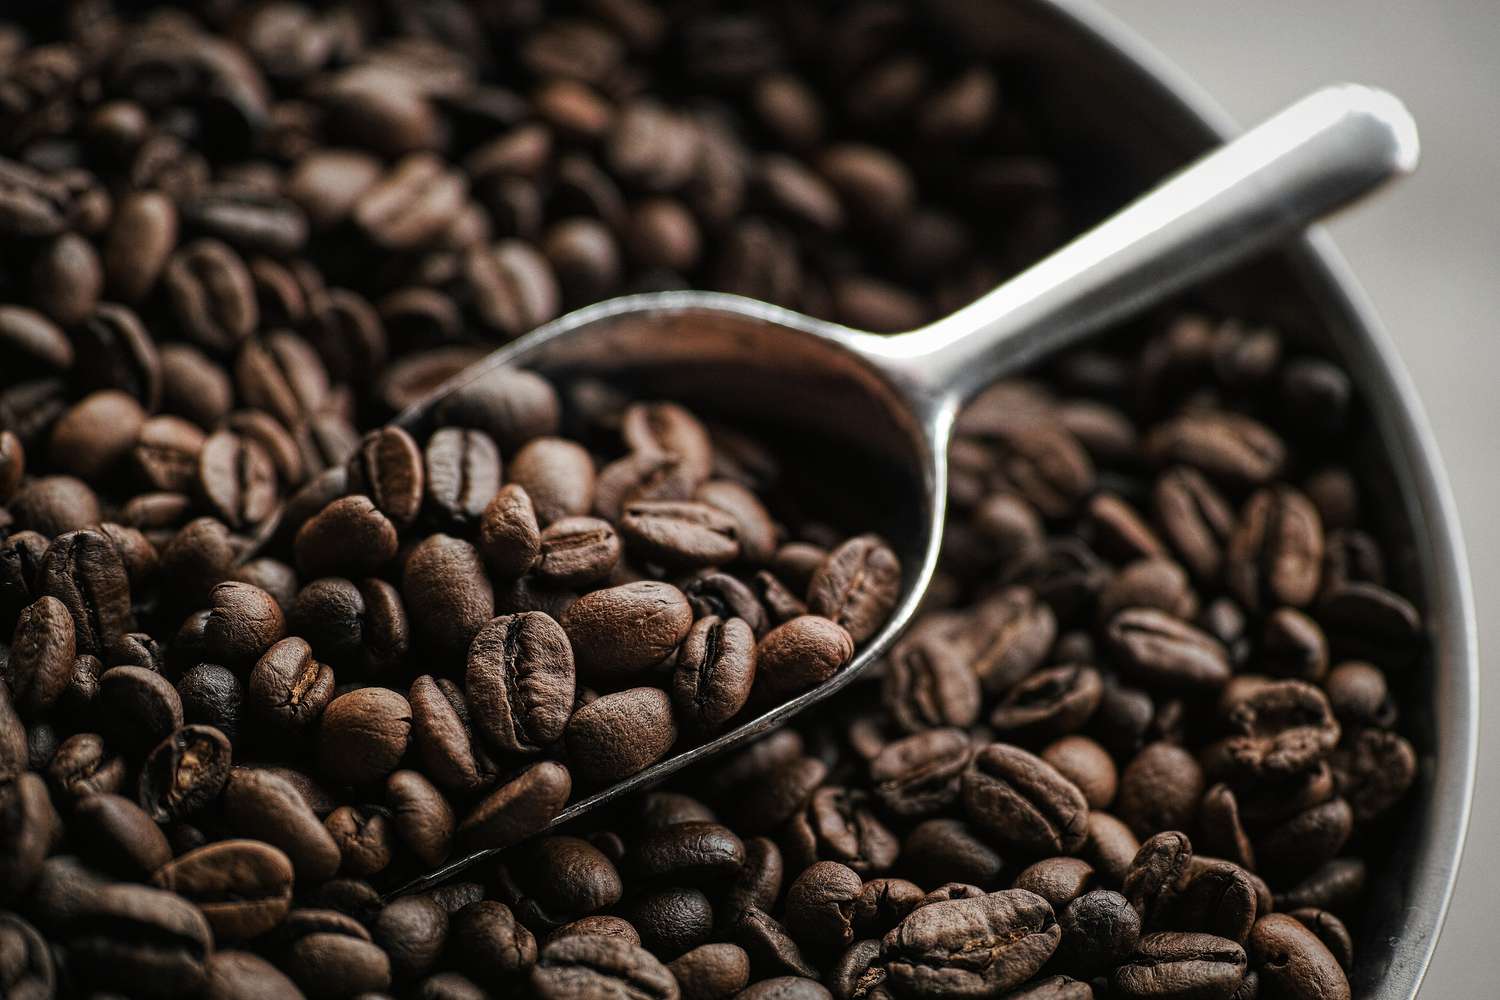 https://www.nectar-of-life.com/bulk-organic-coffee.htm
